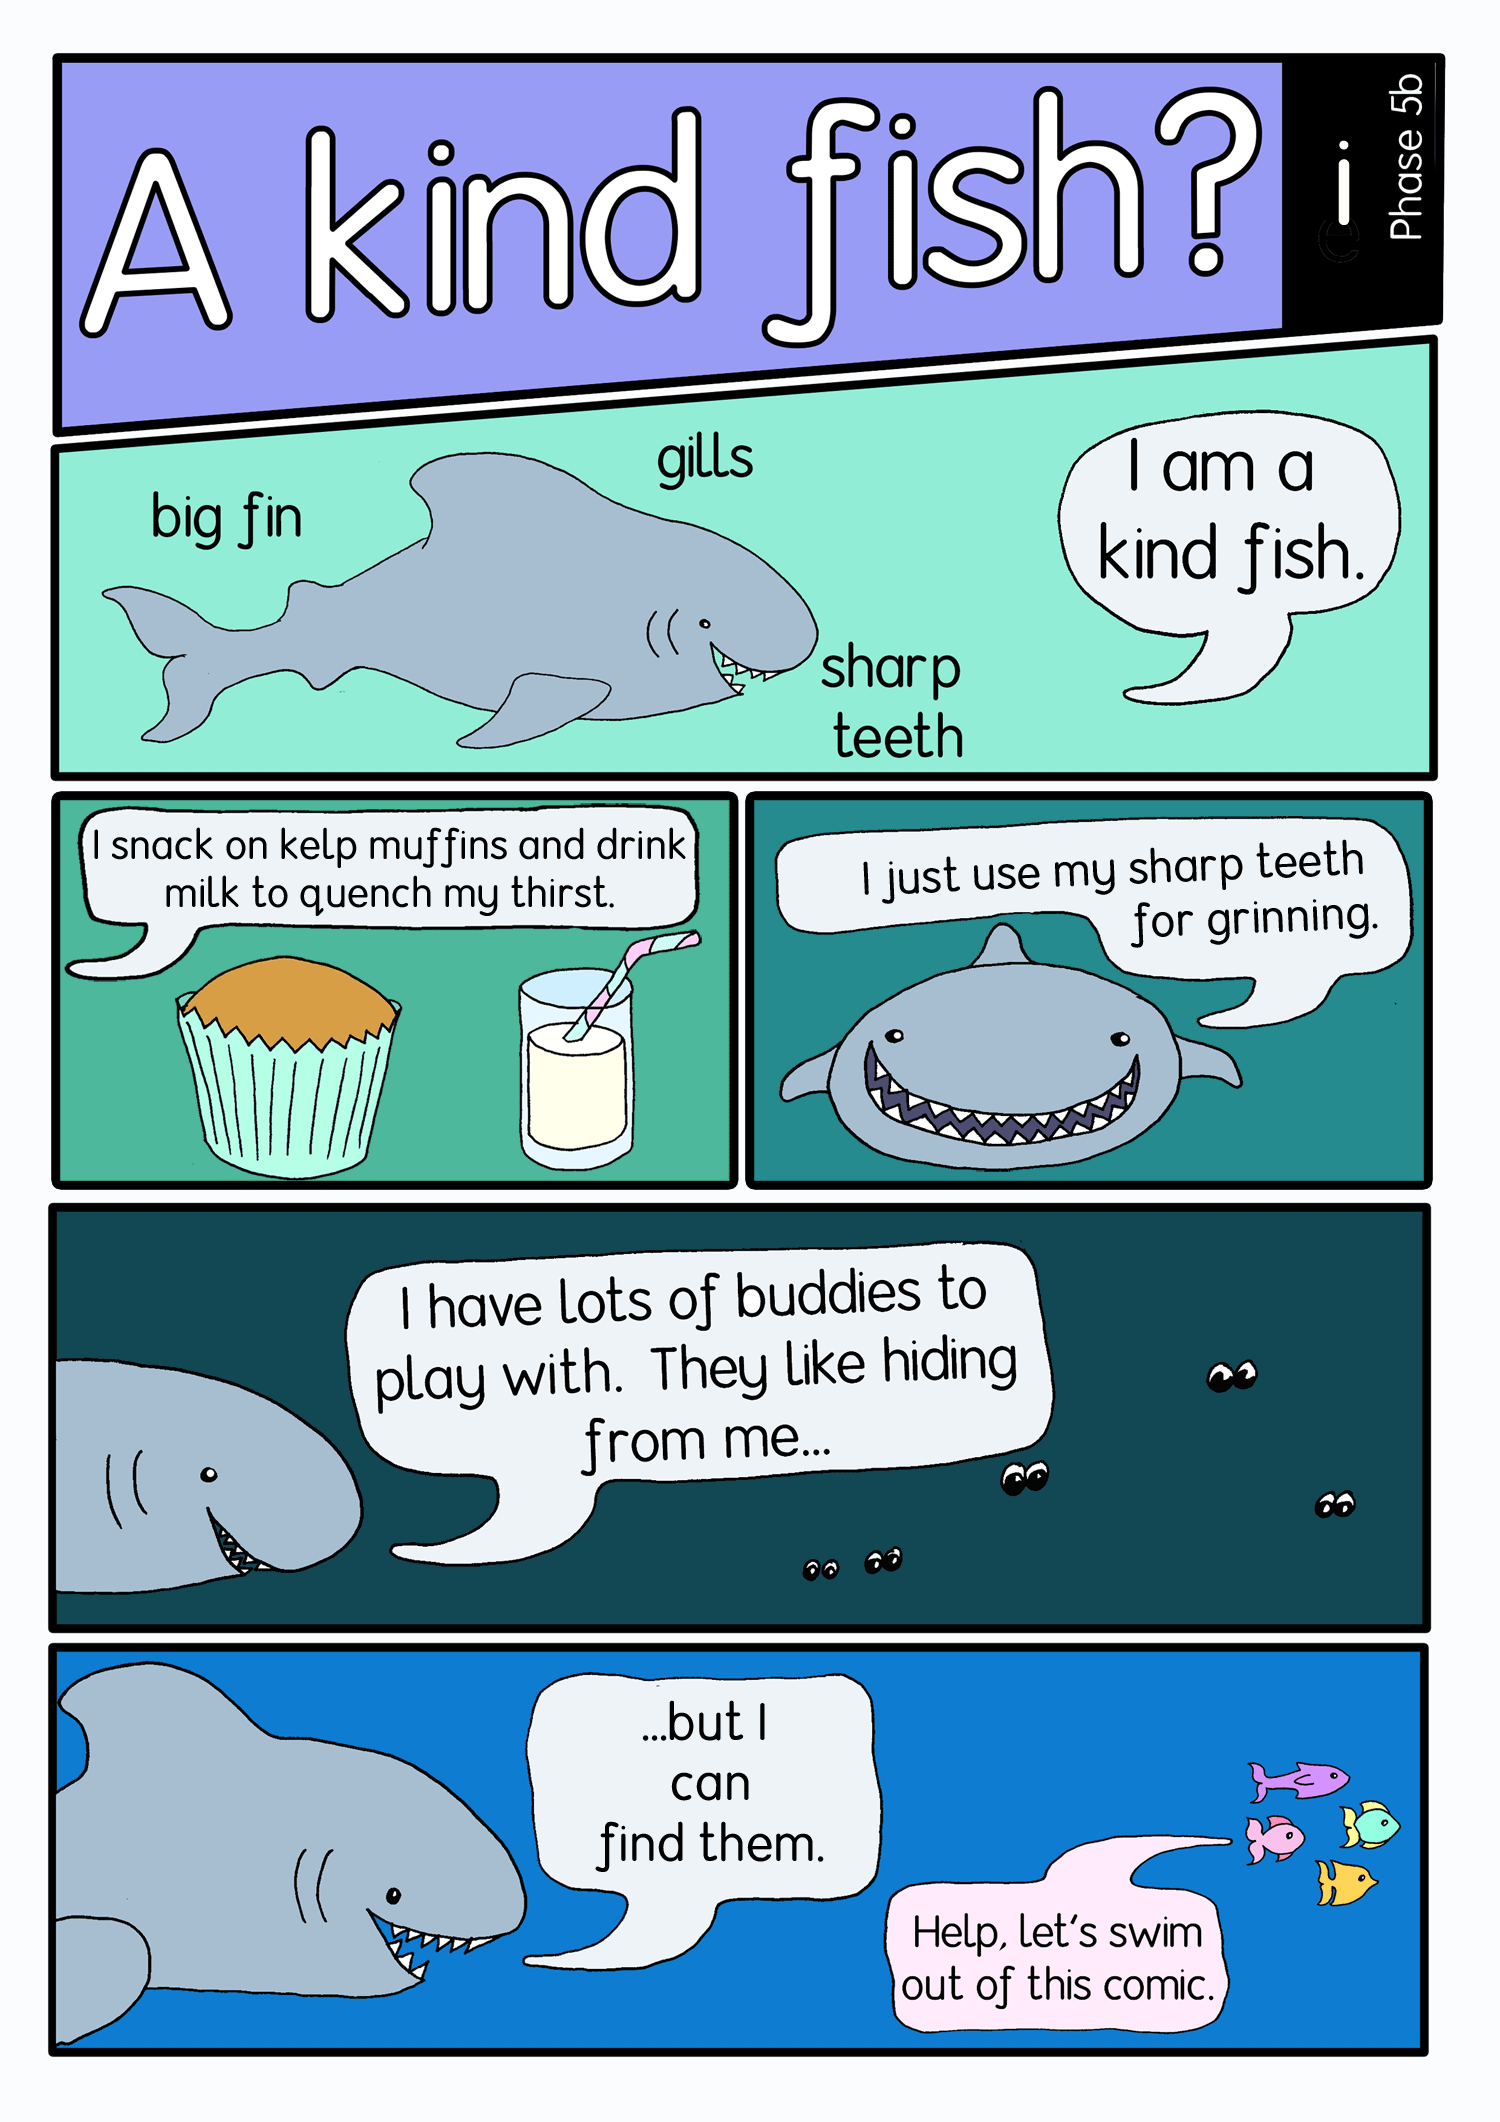 A kind fish comic panel1